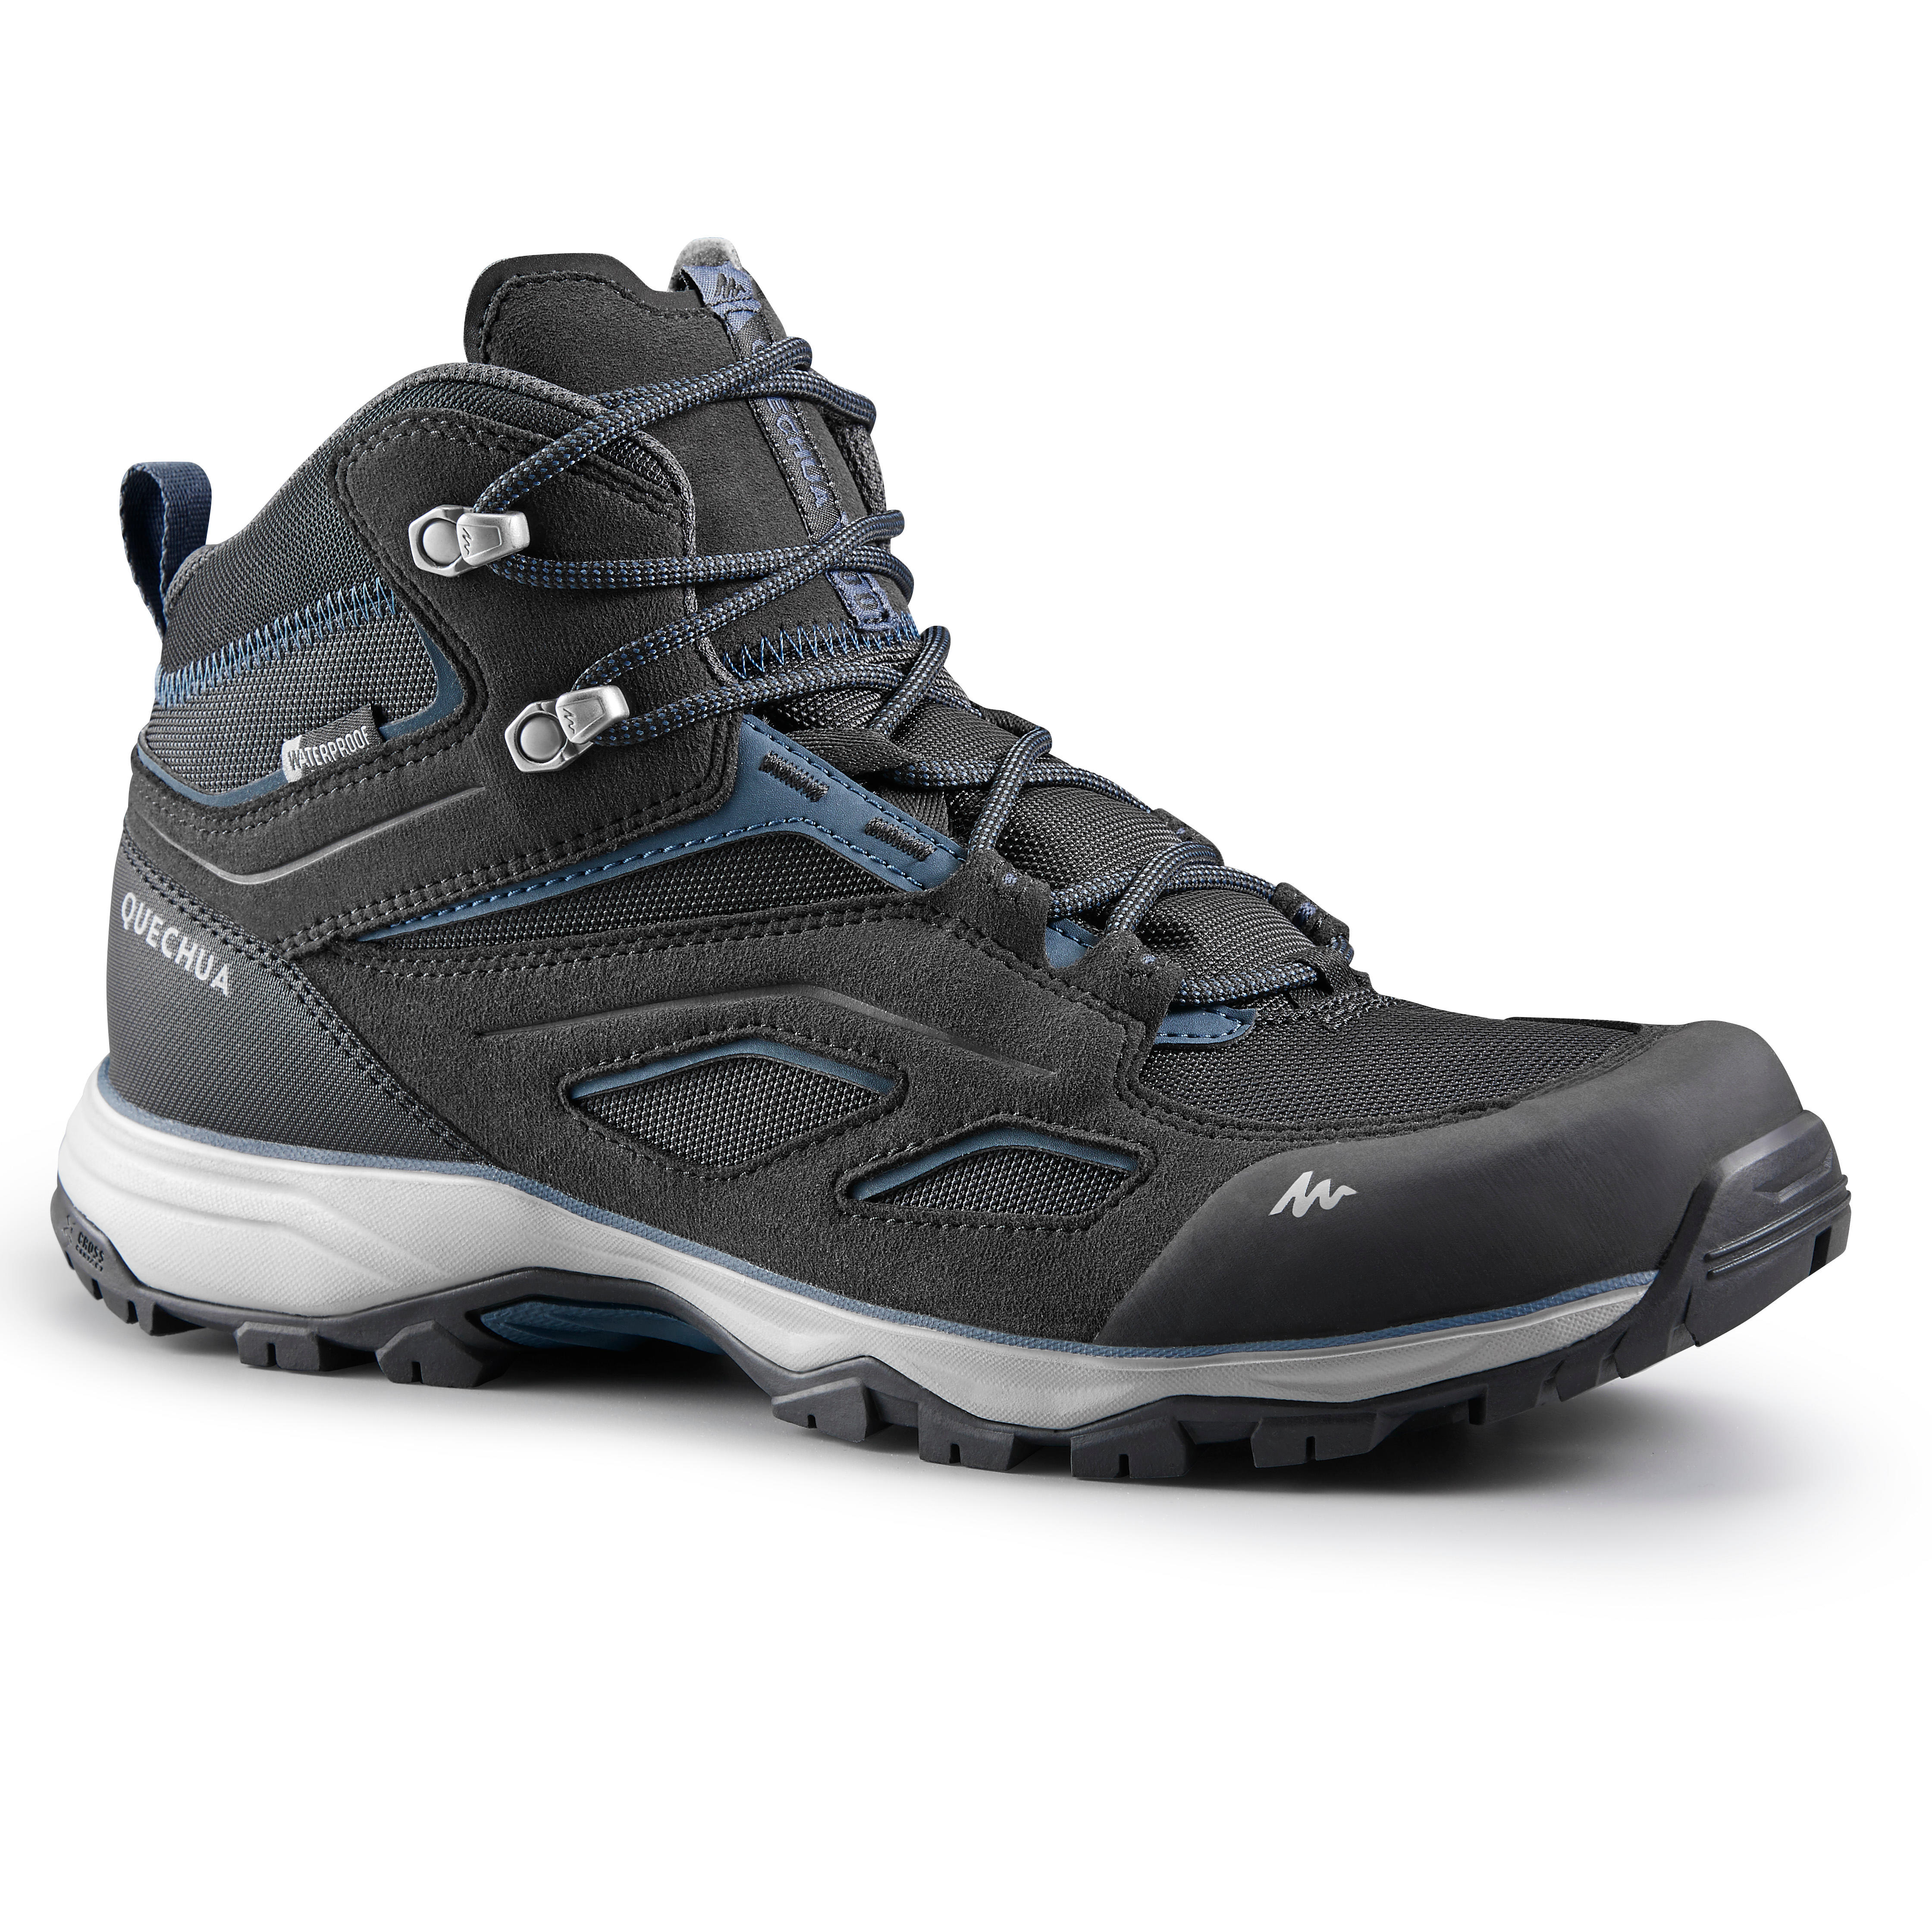 Men's Waterproof Hiking Shoes - MH 100 MID Black - QUECHUA